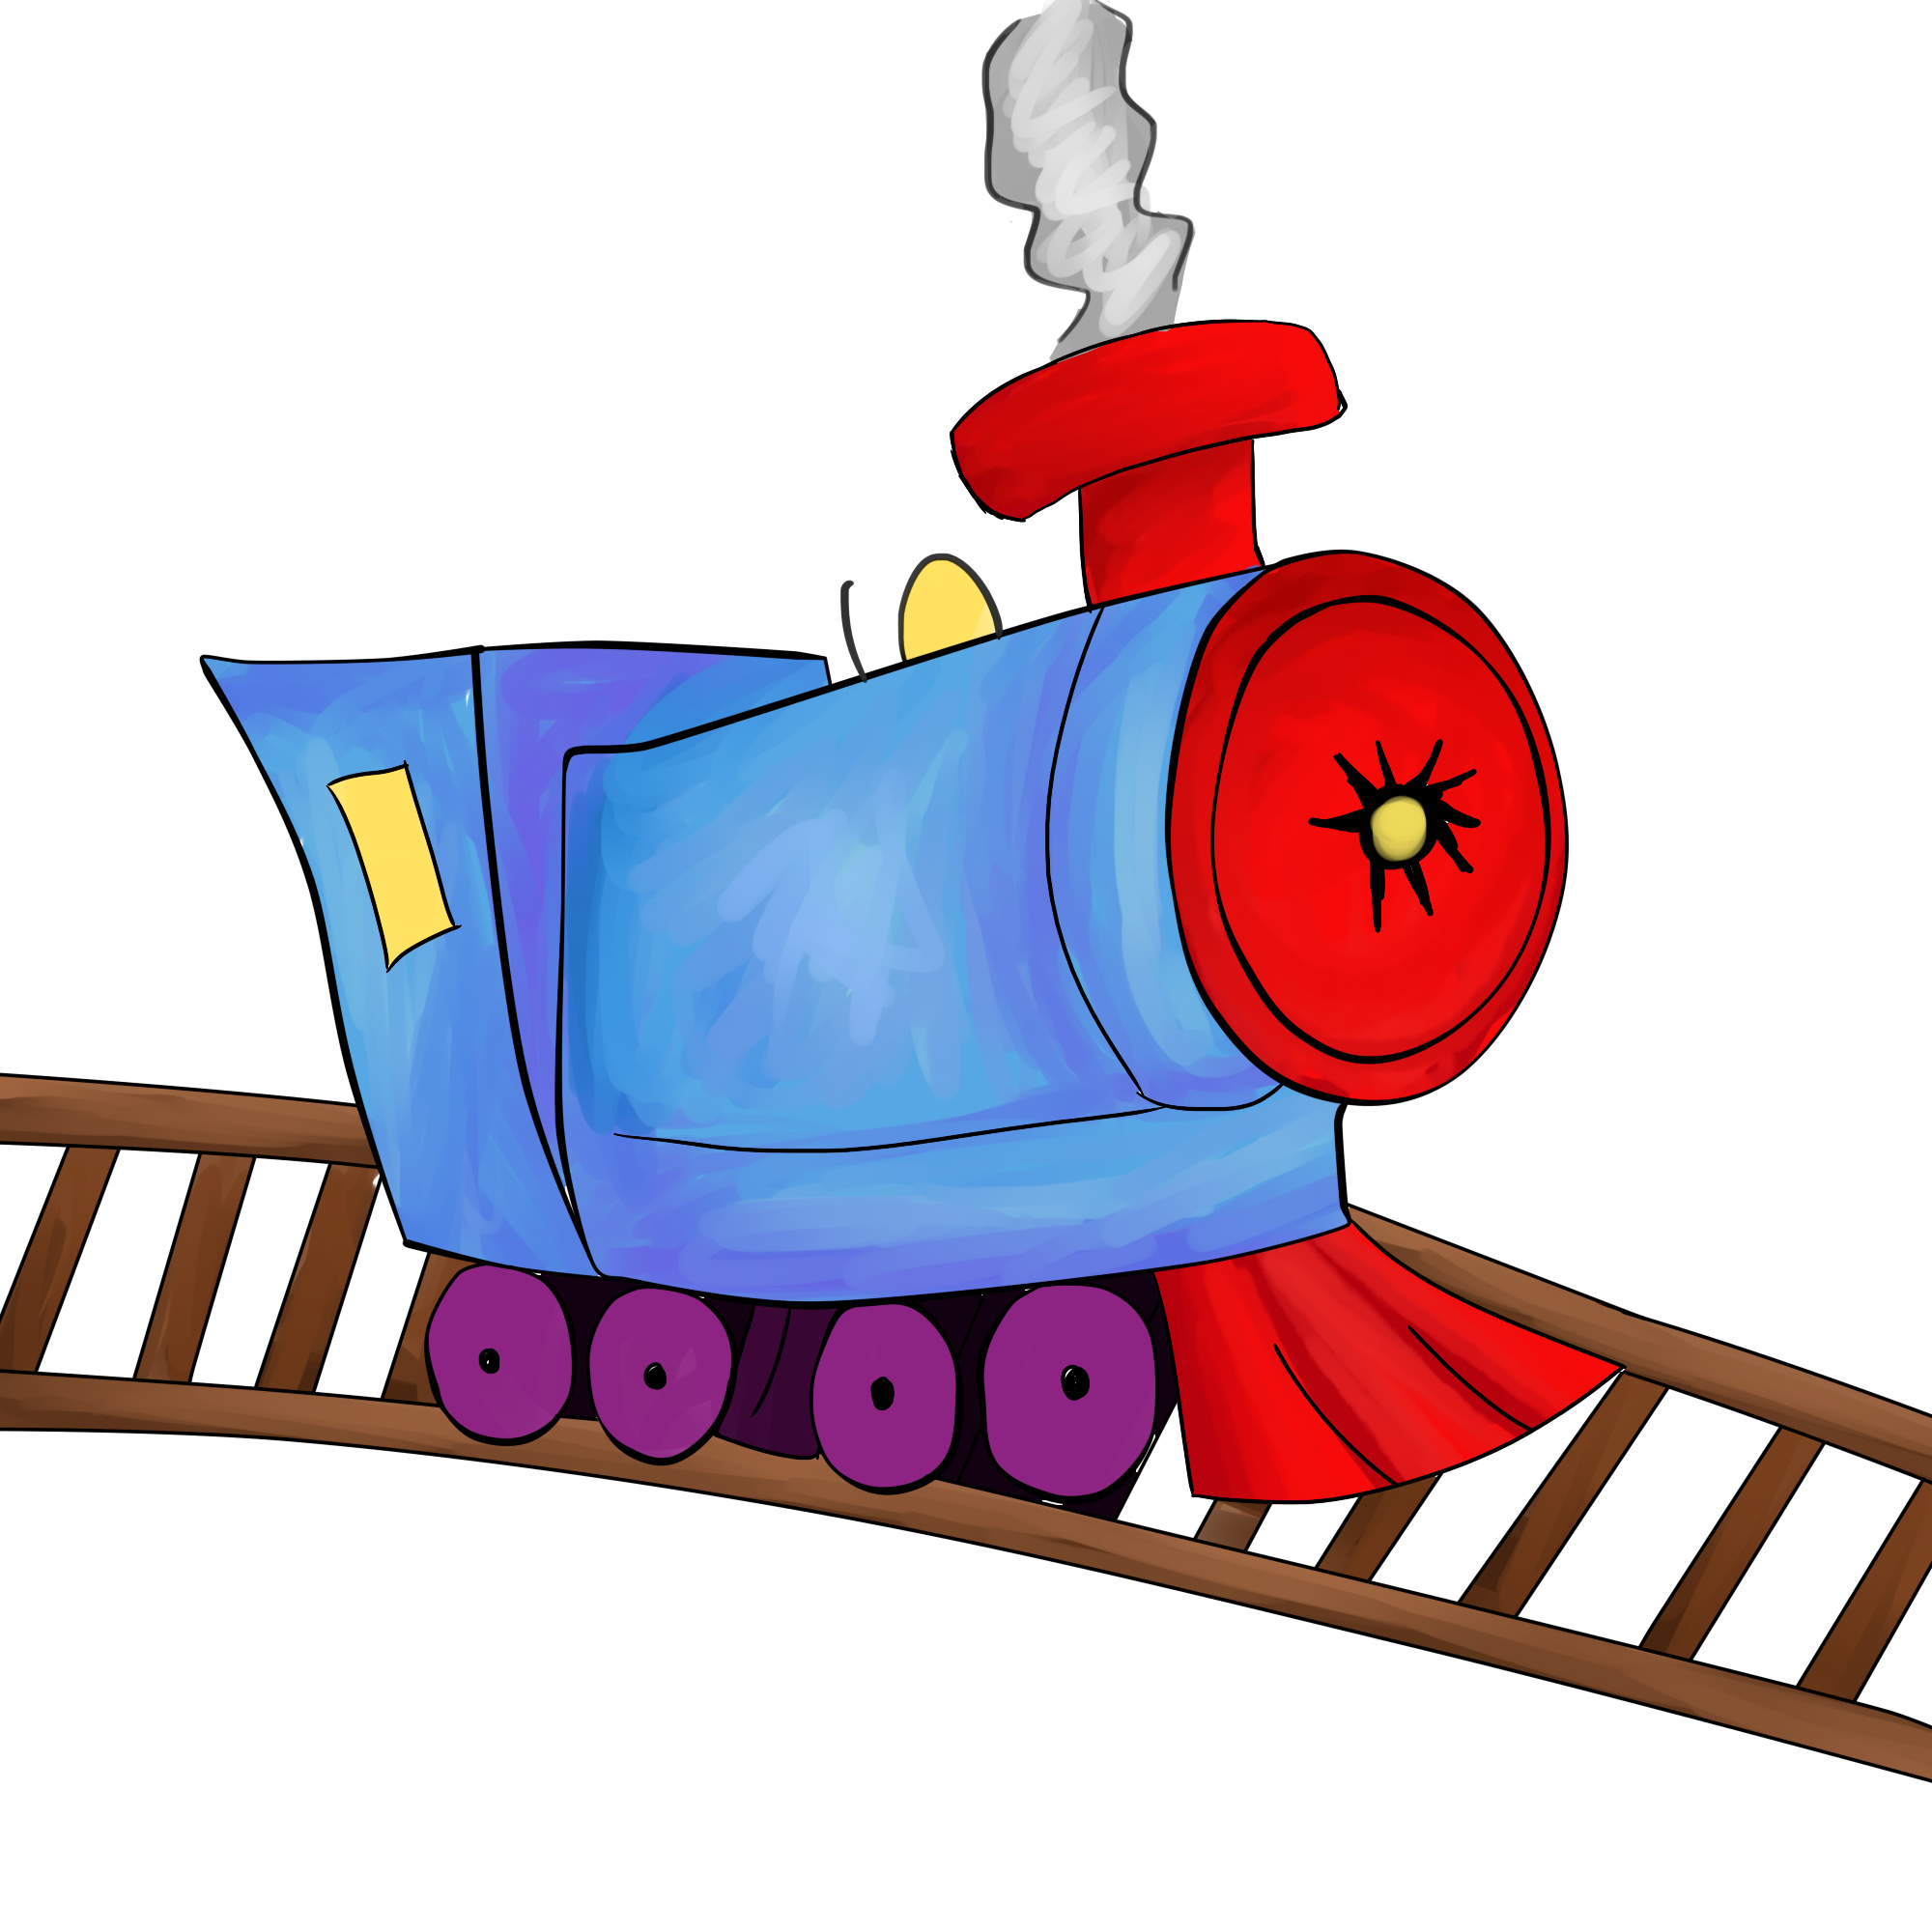 railroad tracks clip art | Clipart Panda - Free Clipart Images